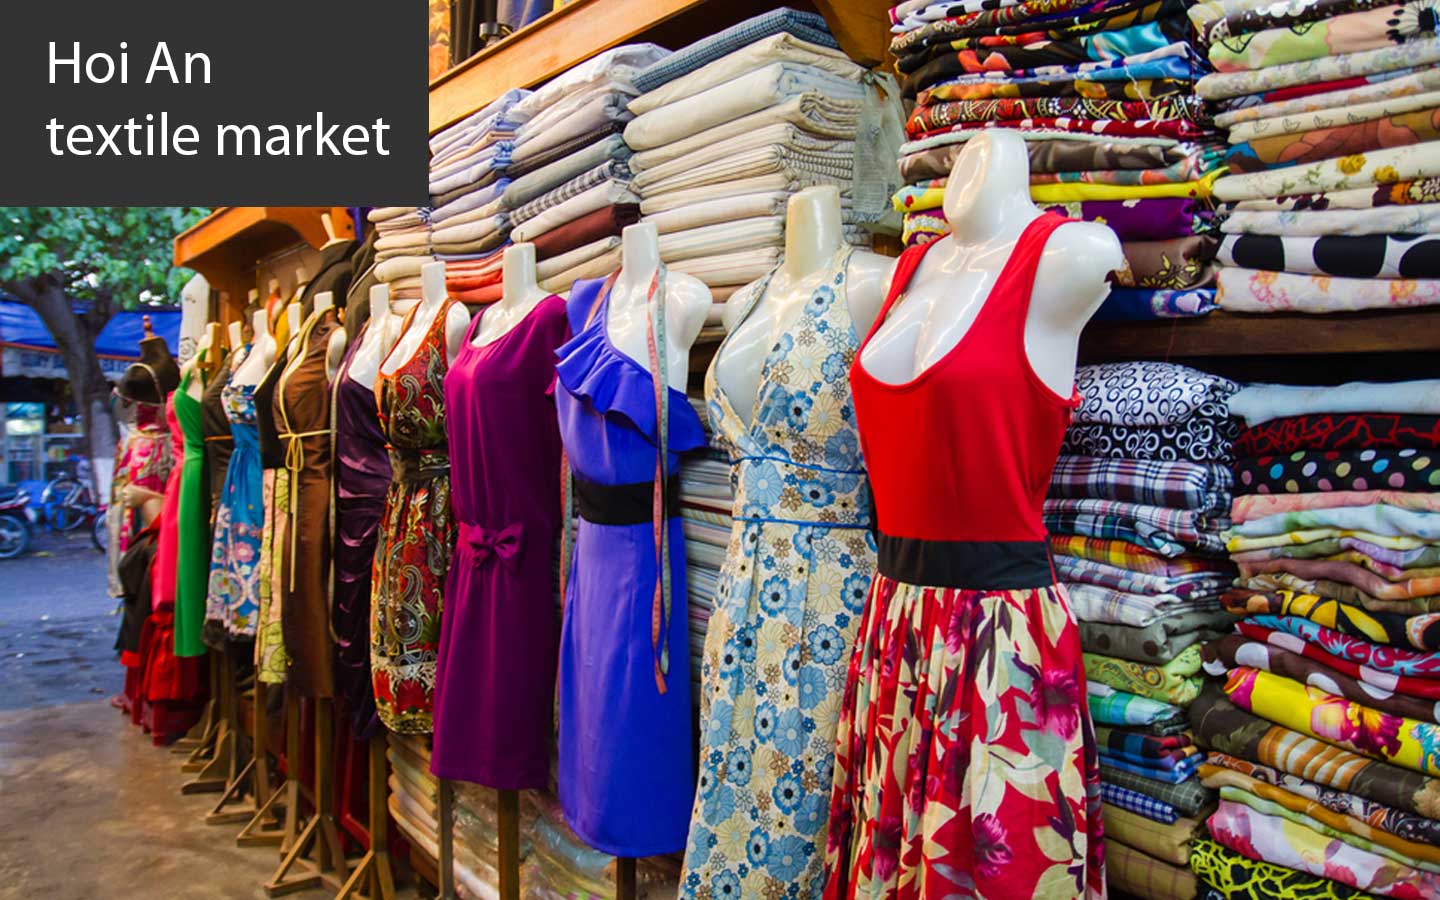 Visit Hoi An Fabric market